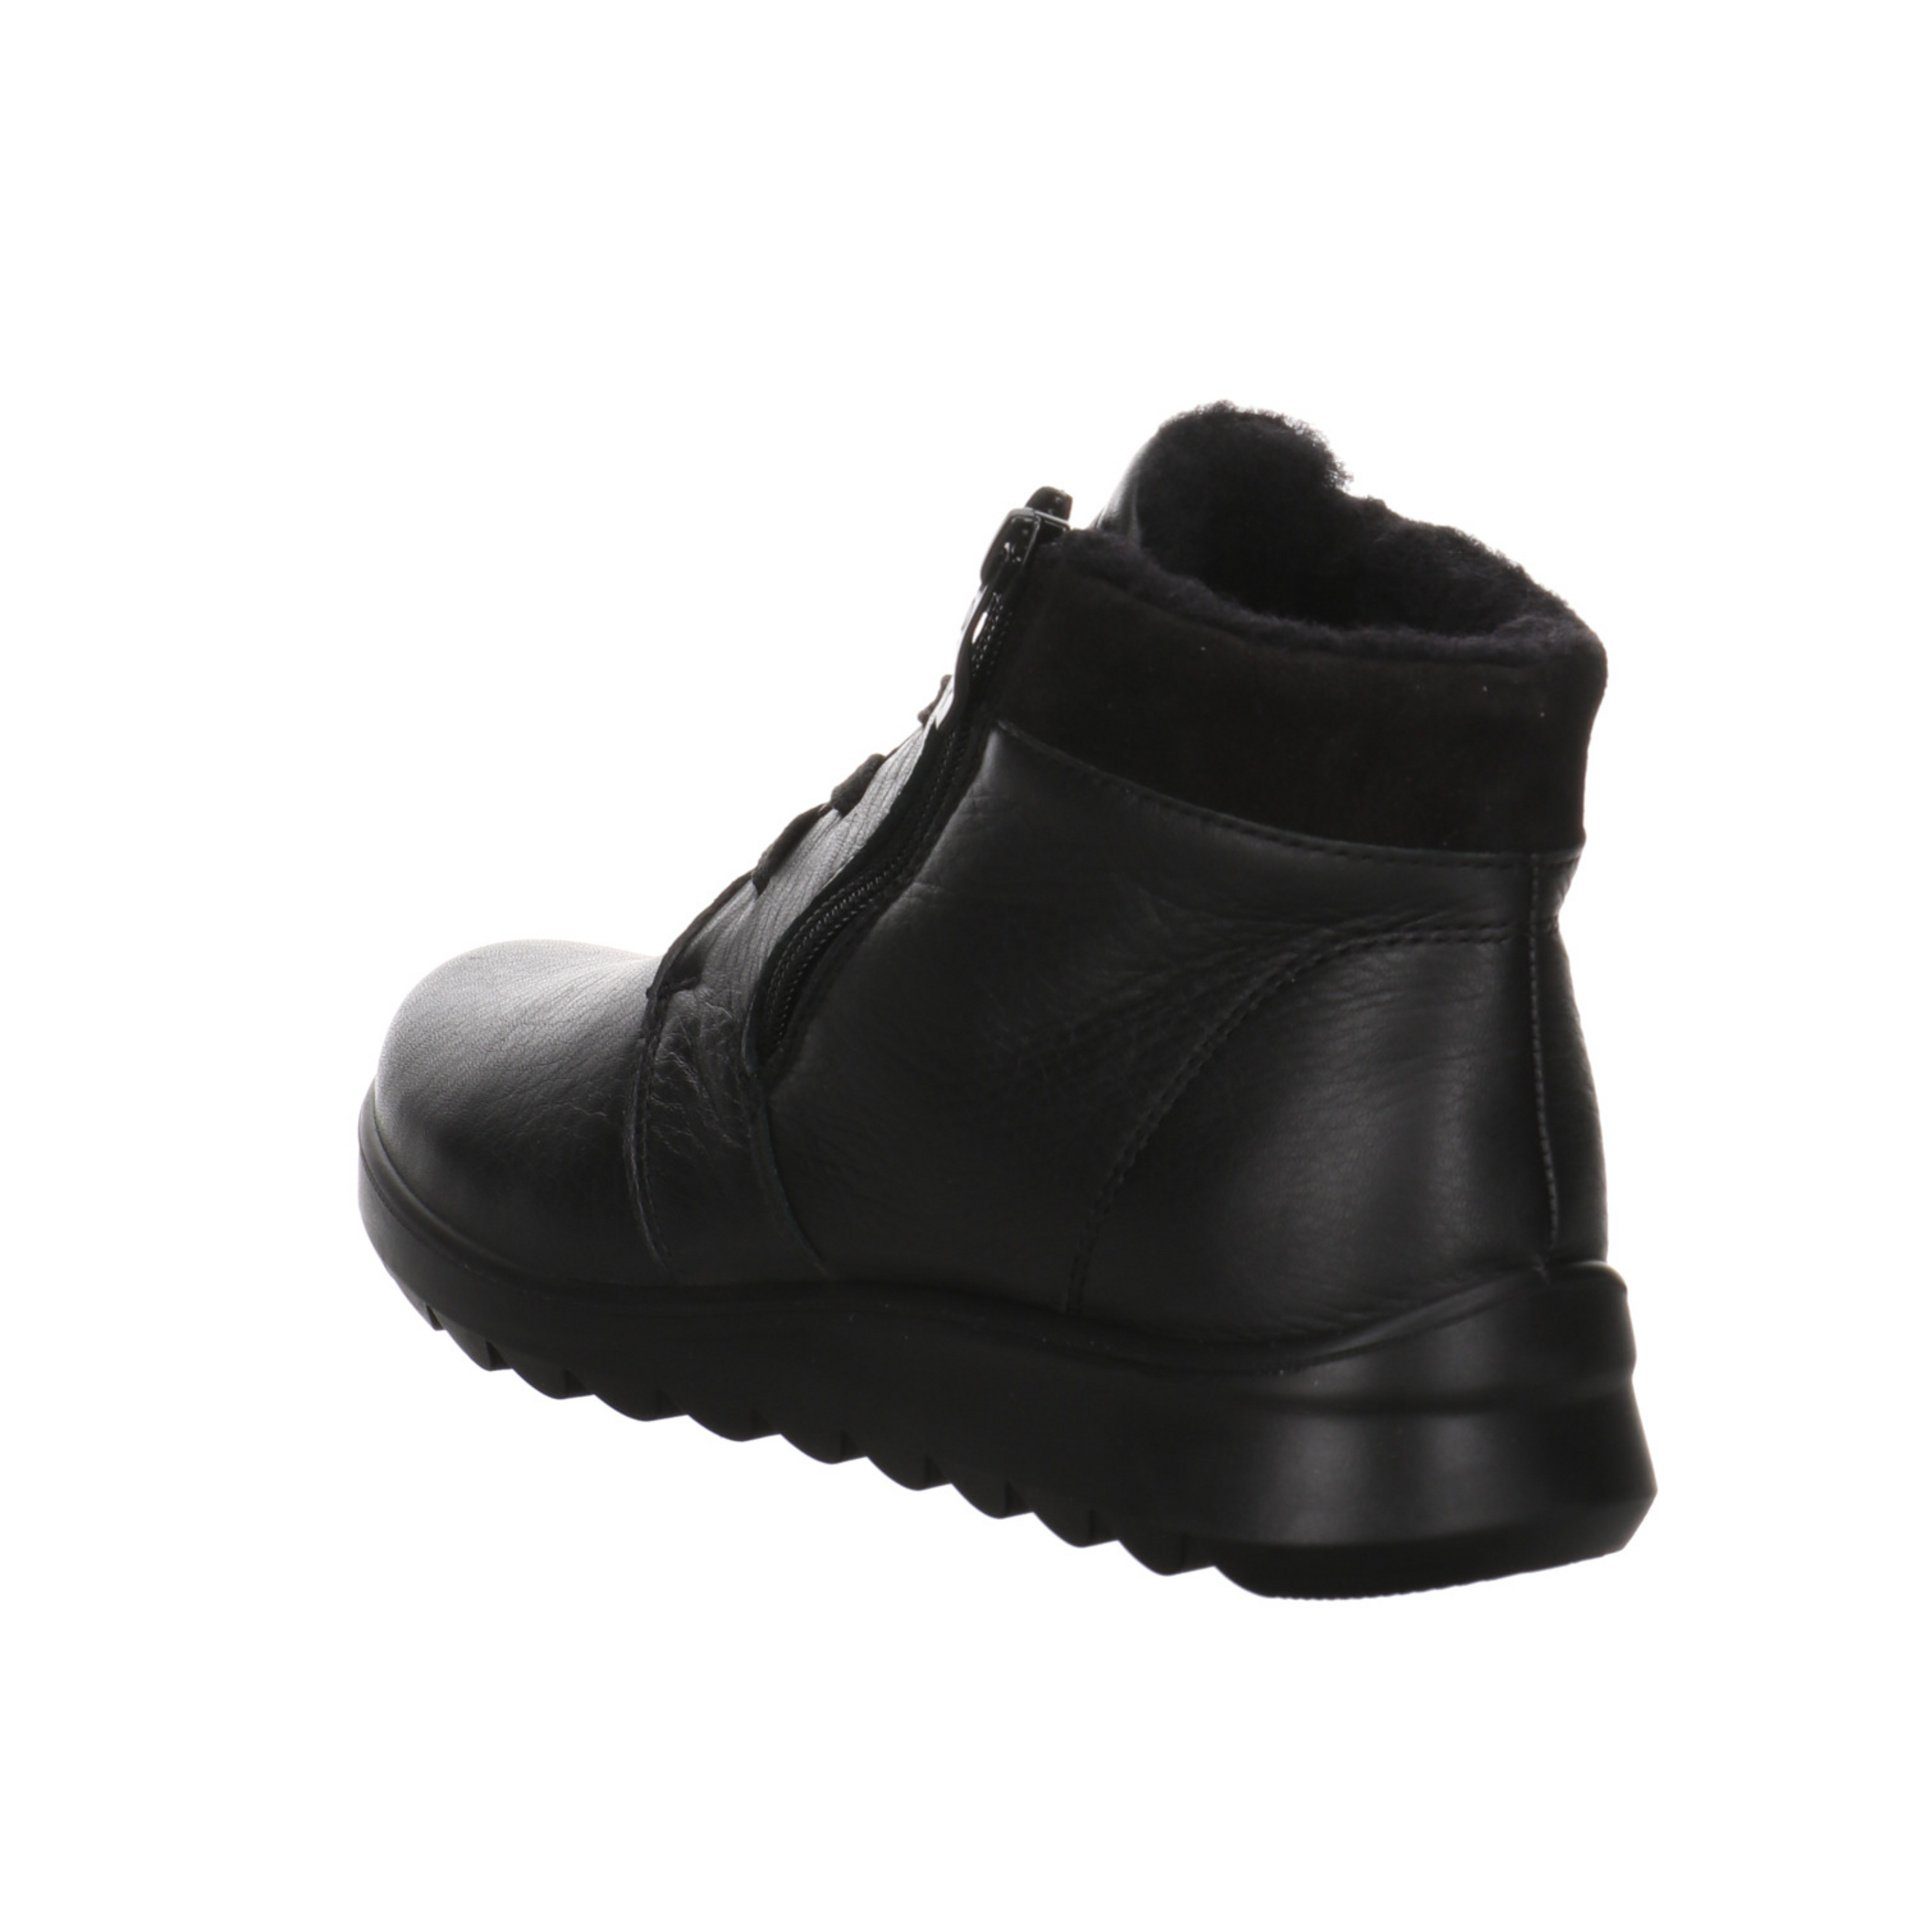 Stiefelette Toronto Damen Stiefel Boots Ara Lederkombination Schuhe 046874 schwarz